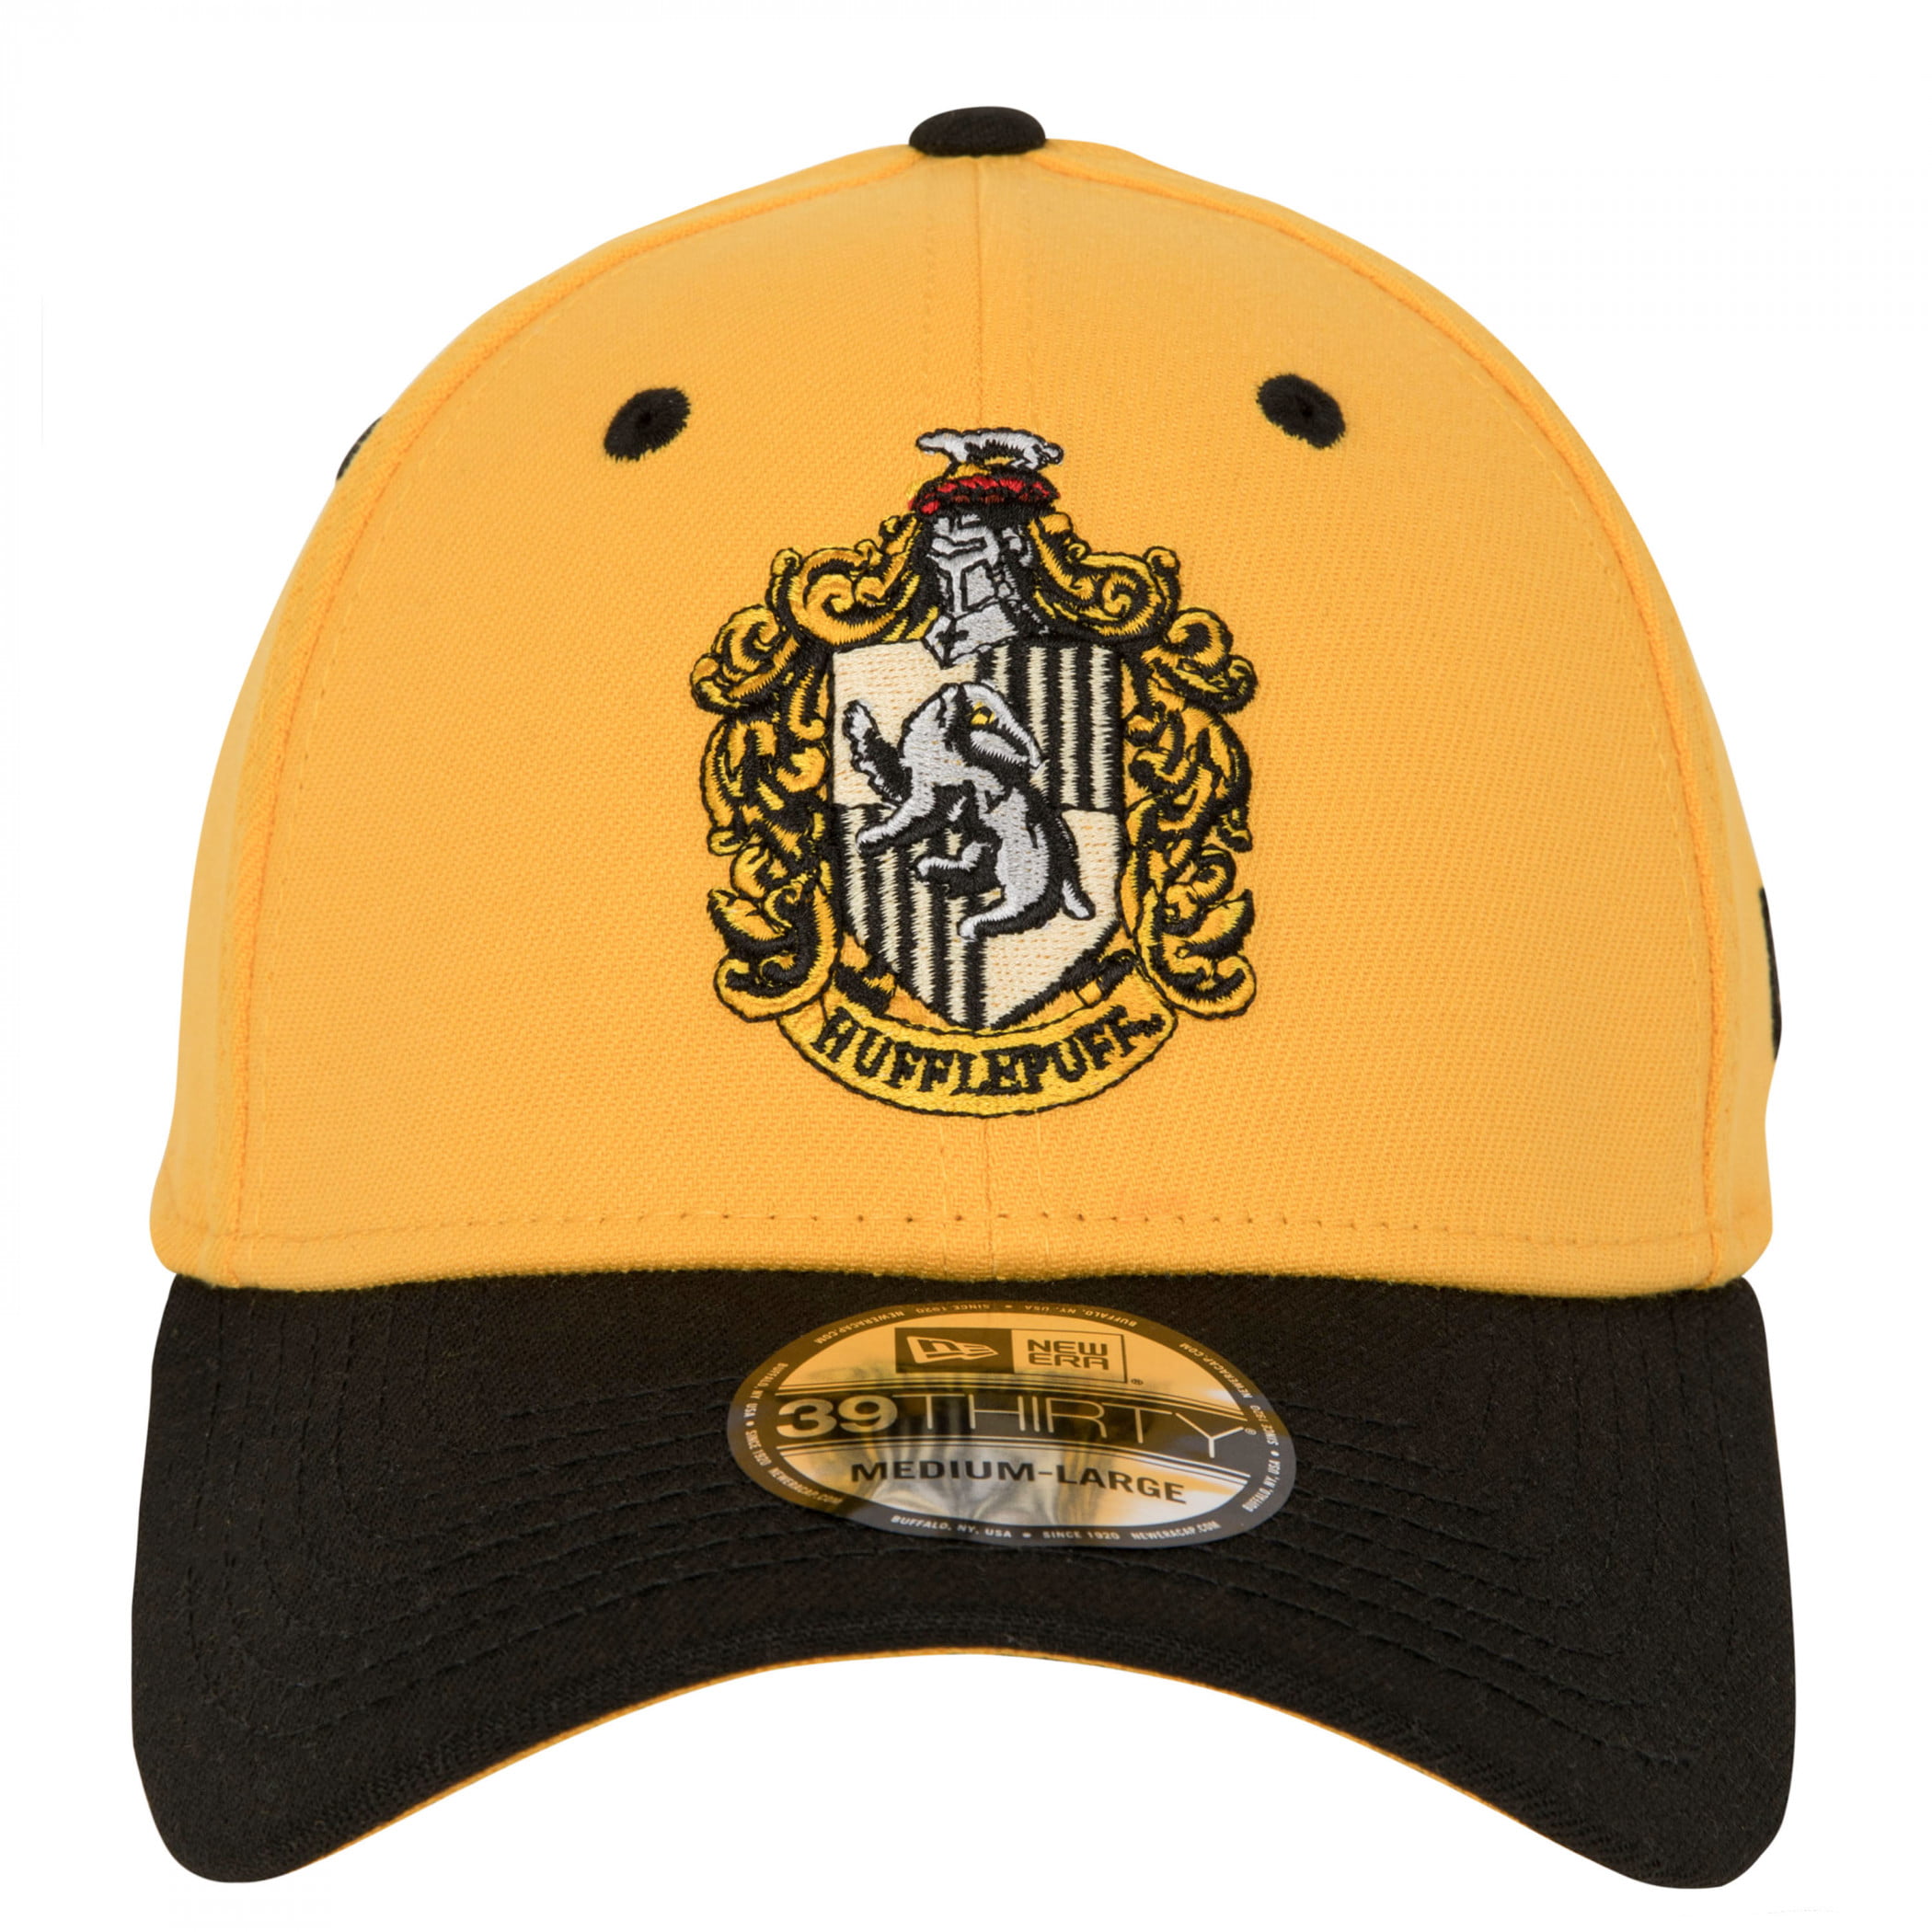 Era Hat-Small/Medium Crest Fitted Potter New Harry 39Thirty Hufflepuff